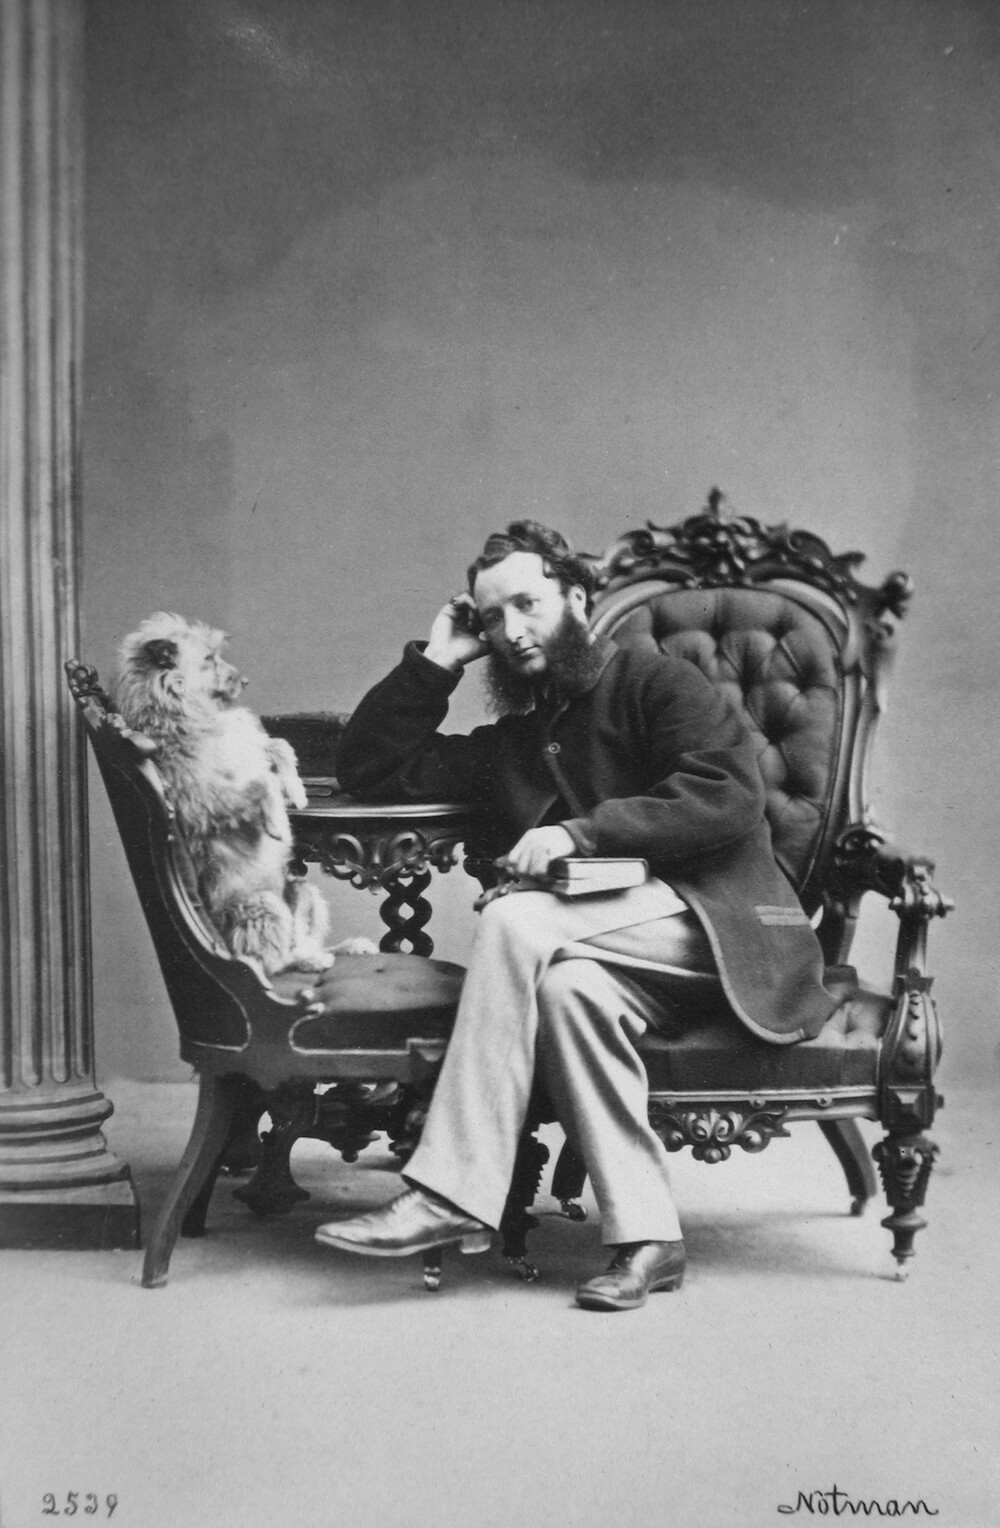 1862 - William P. Despard and dog, Montreal